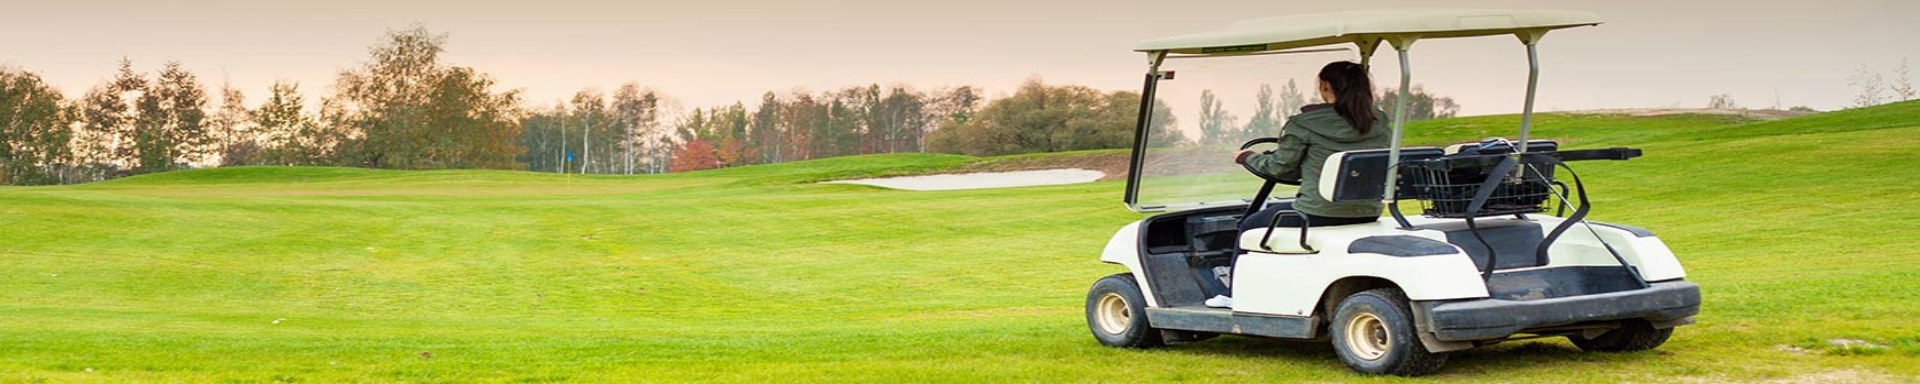 Golf Cart Batteries | RogueFuel.ca | Munro Industries rf-1007030905